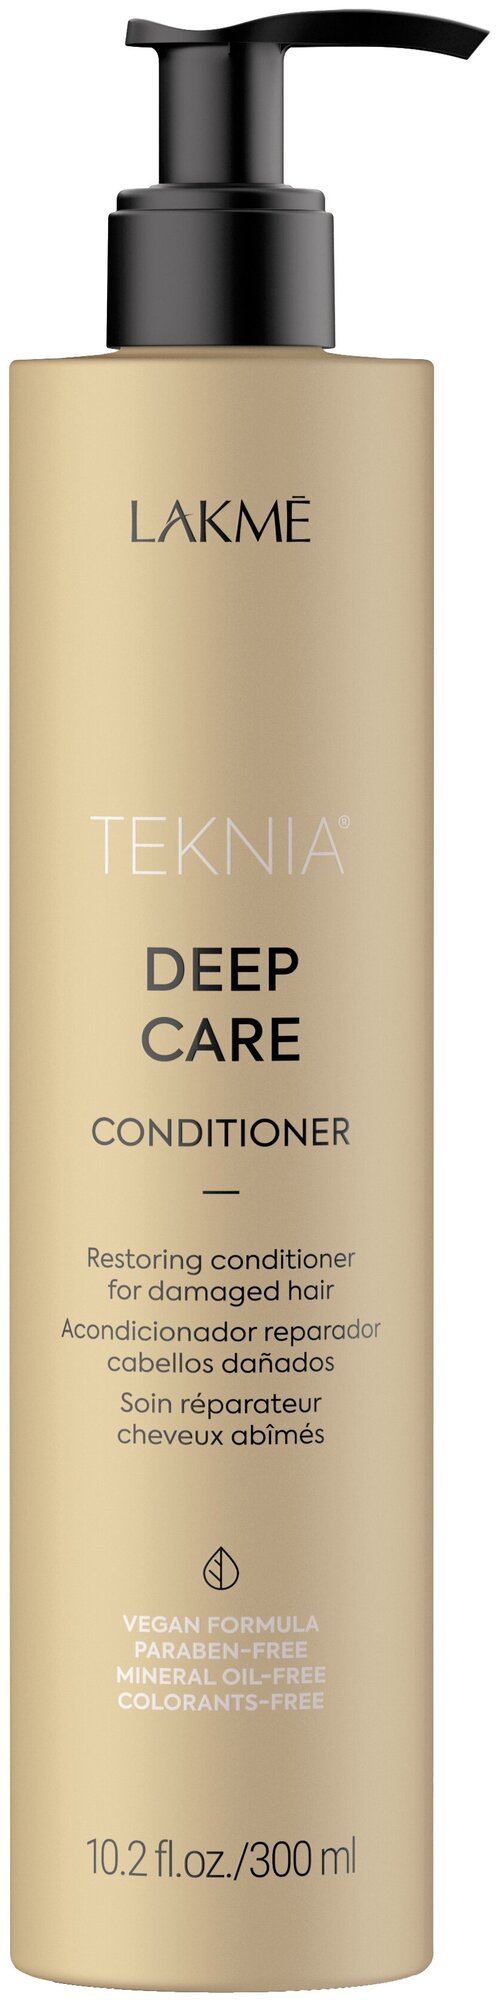 Lakme Teknia Deep Care Кондиционер восстанавливающий для сухих или поврежденных волос, 300 мл